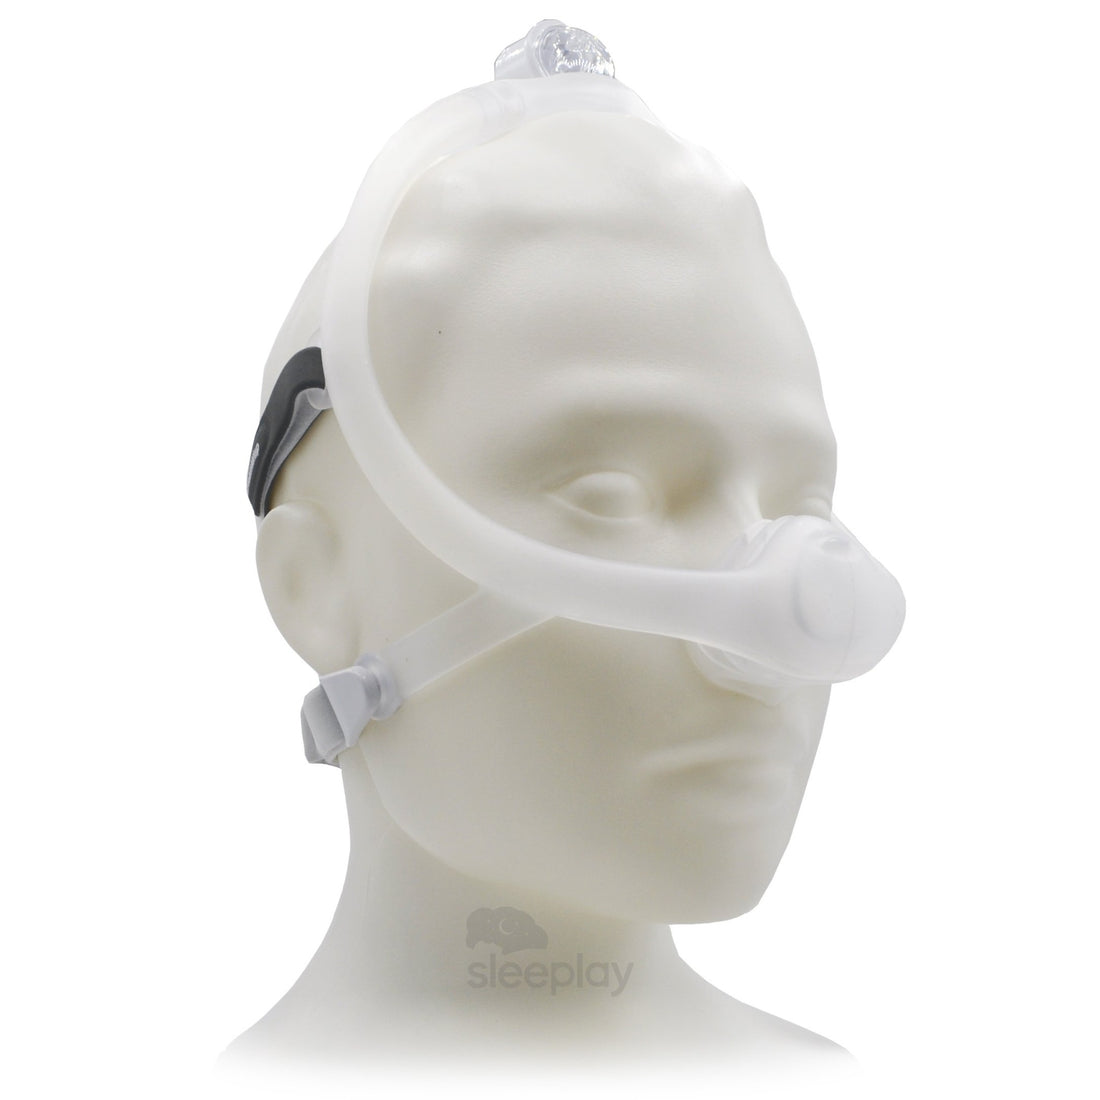 Philips Respironics Dreamwisp Nasal Cpap Mask With Headgear Sleeplay 3151